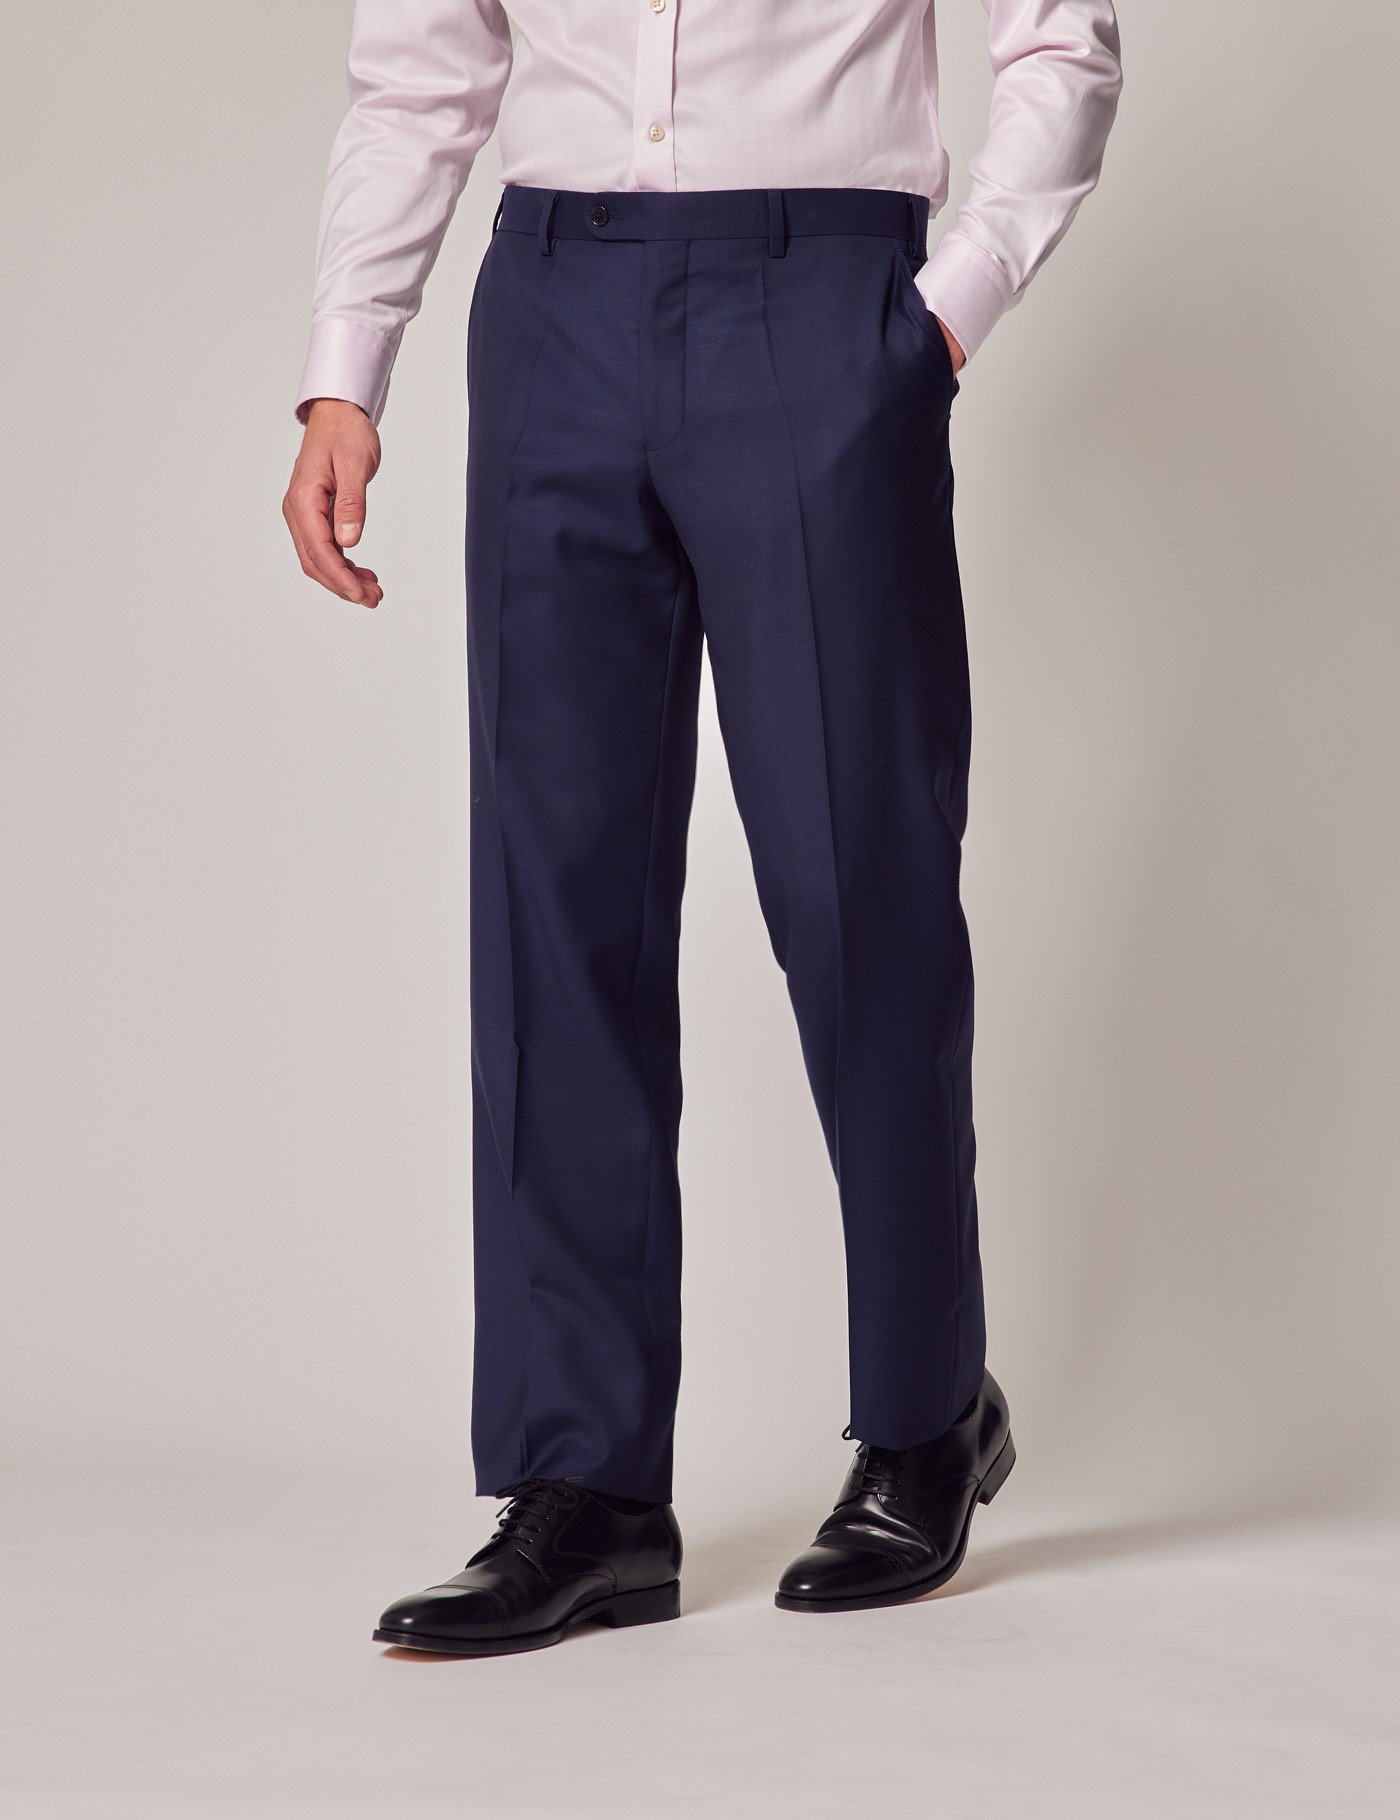 Richard Parker Men Solid Dark Navy Trousers - Selling Fast at Pantaloons.com